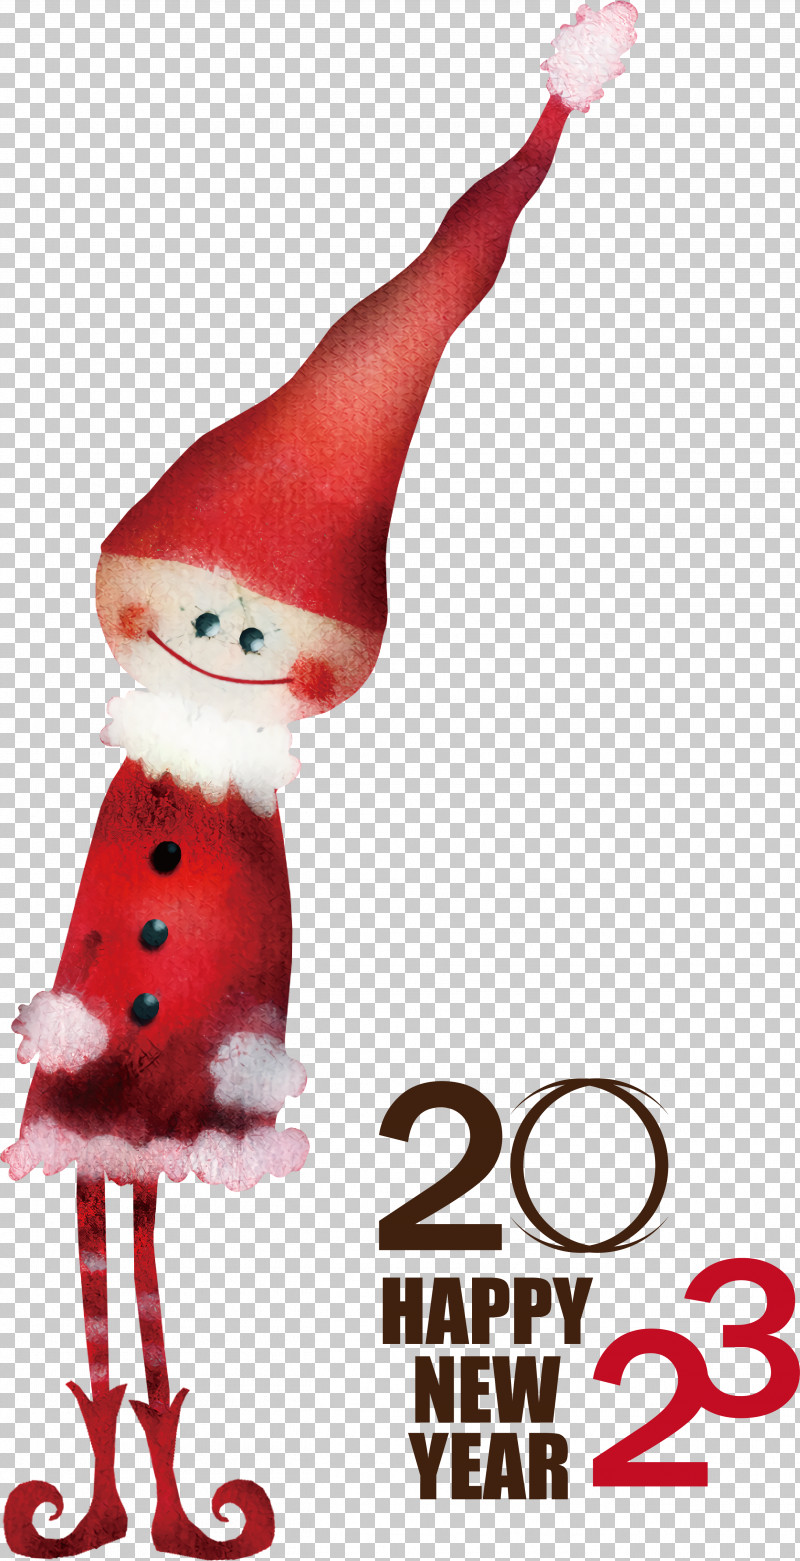 Santa Claus PNG, Clipart, Bauble, Christmas, Christmas Card, Christmas Gift, Christmas Tree Free PNG Download